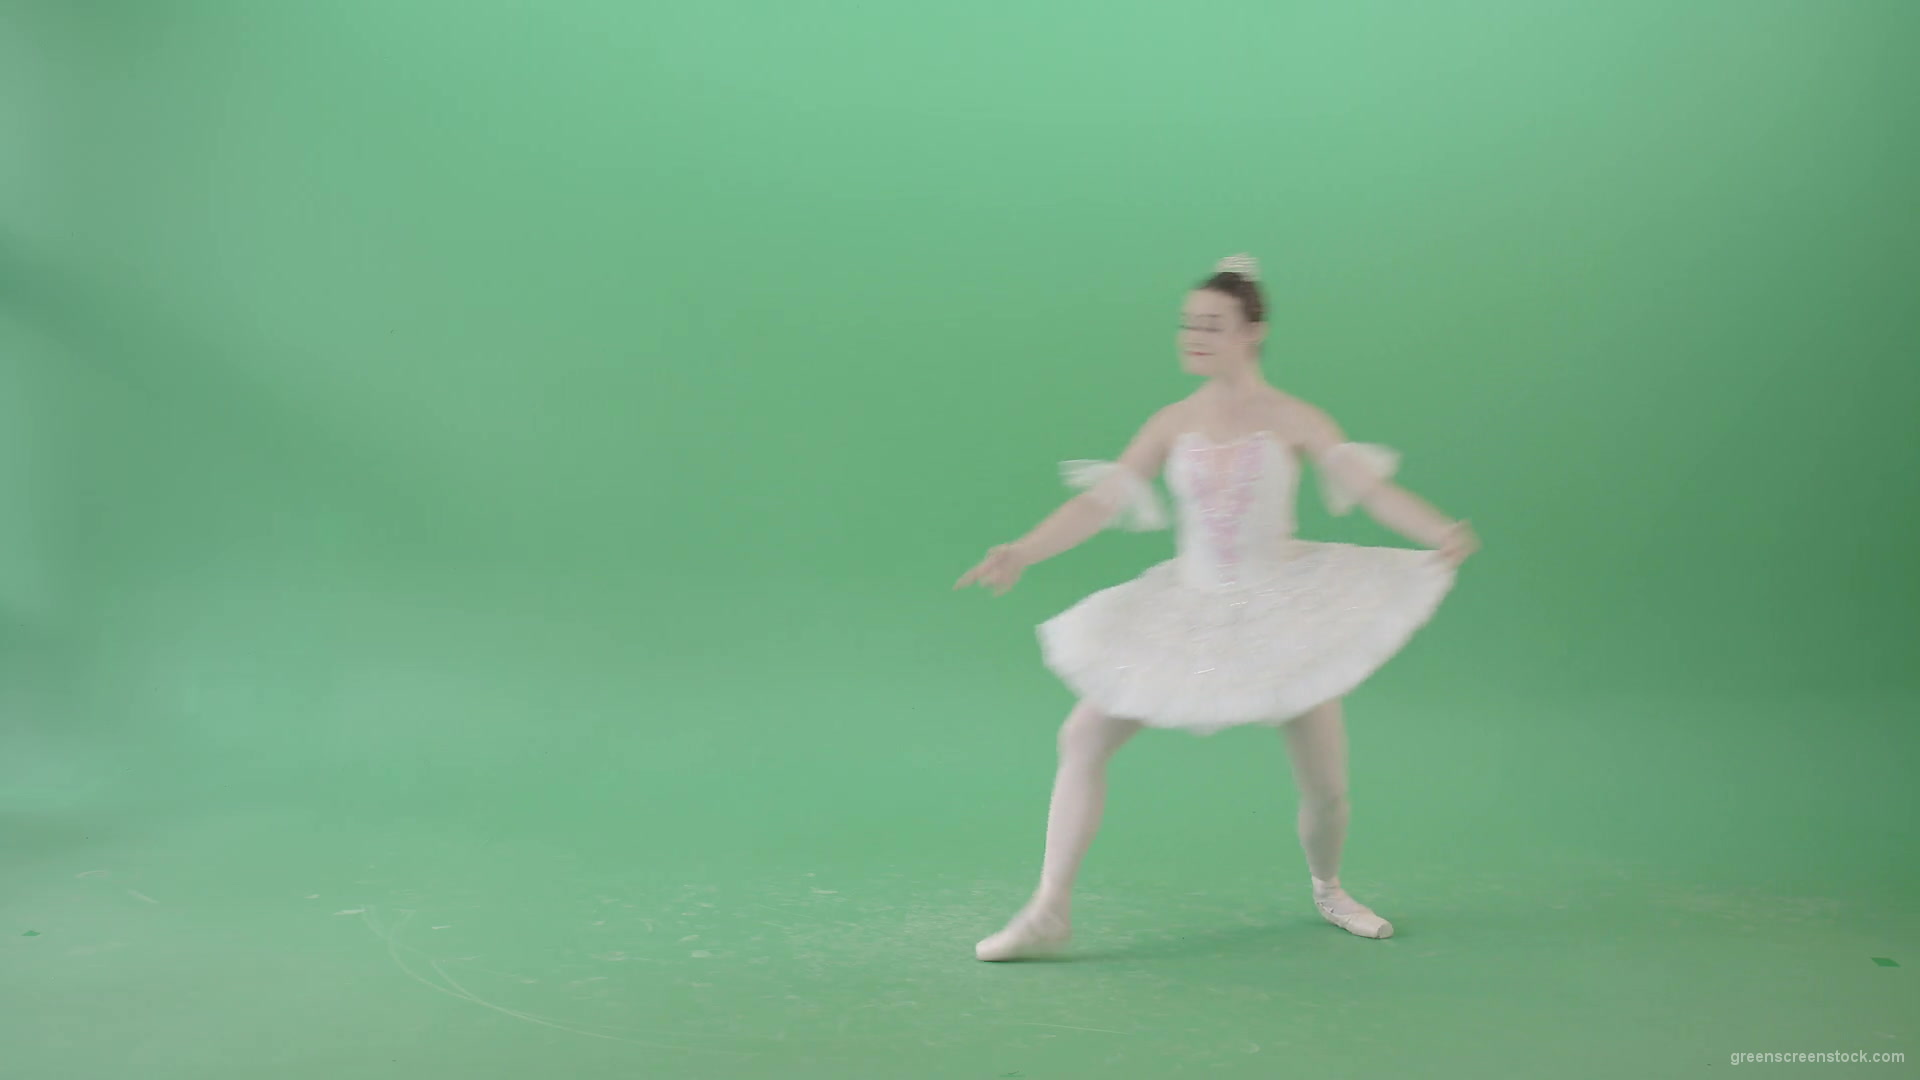 Flexibility-ballet-dancing-performance-girl-dancing-Classical-adagio-opera-on-green-screen-4K-Video-footage-1920_007 Green Screen Stock